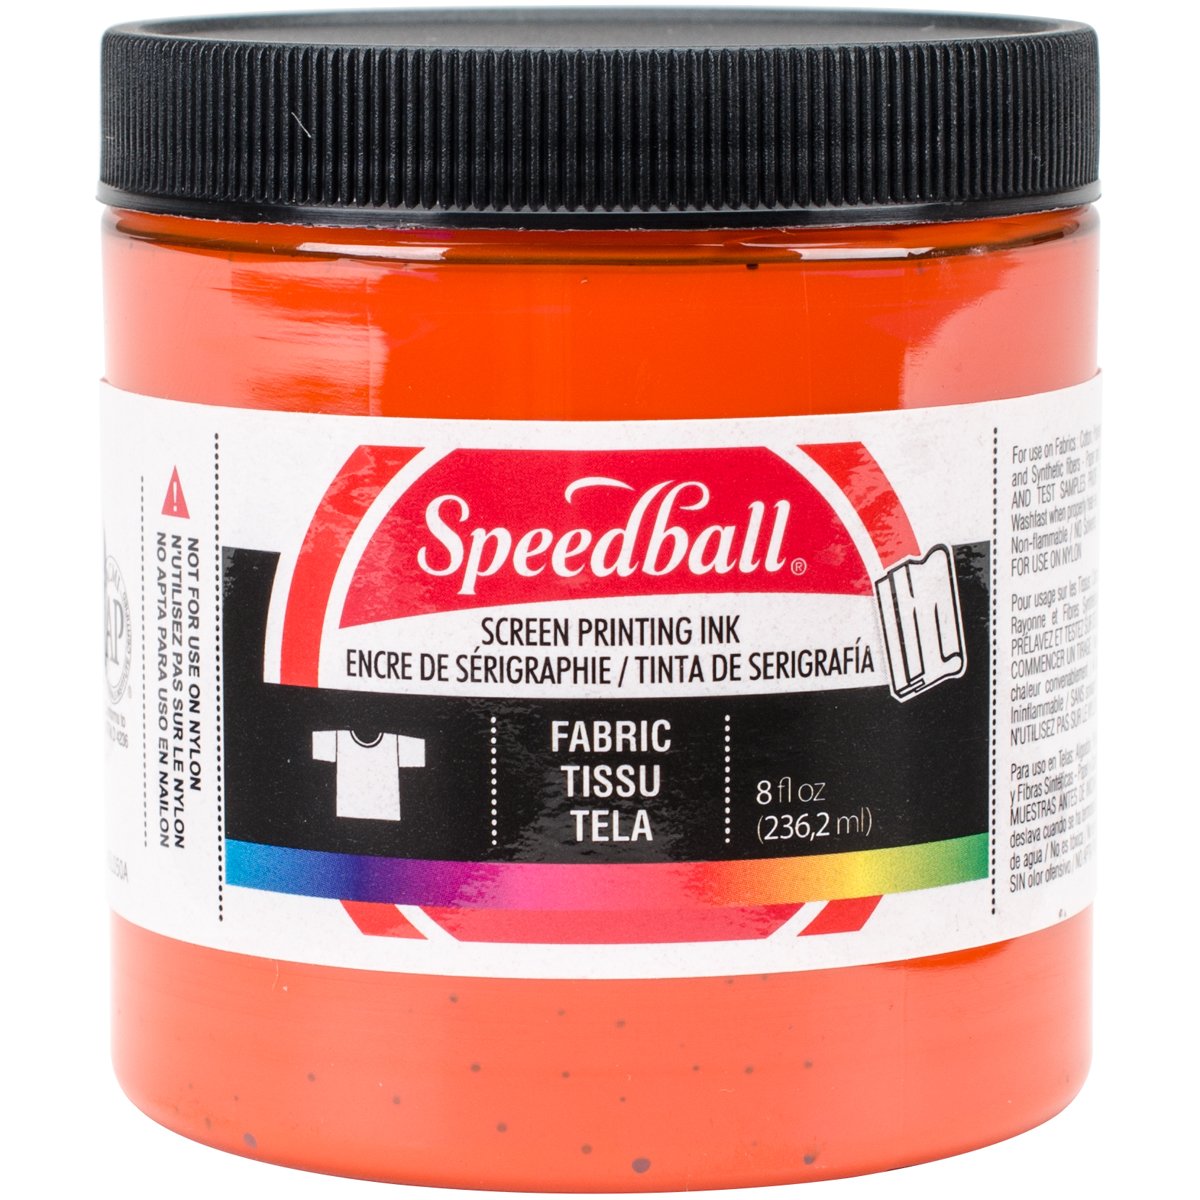 Speedball Fabric Screen Printing Ink 8 oz. Orange